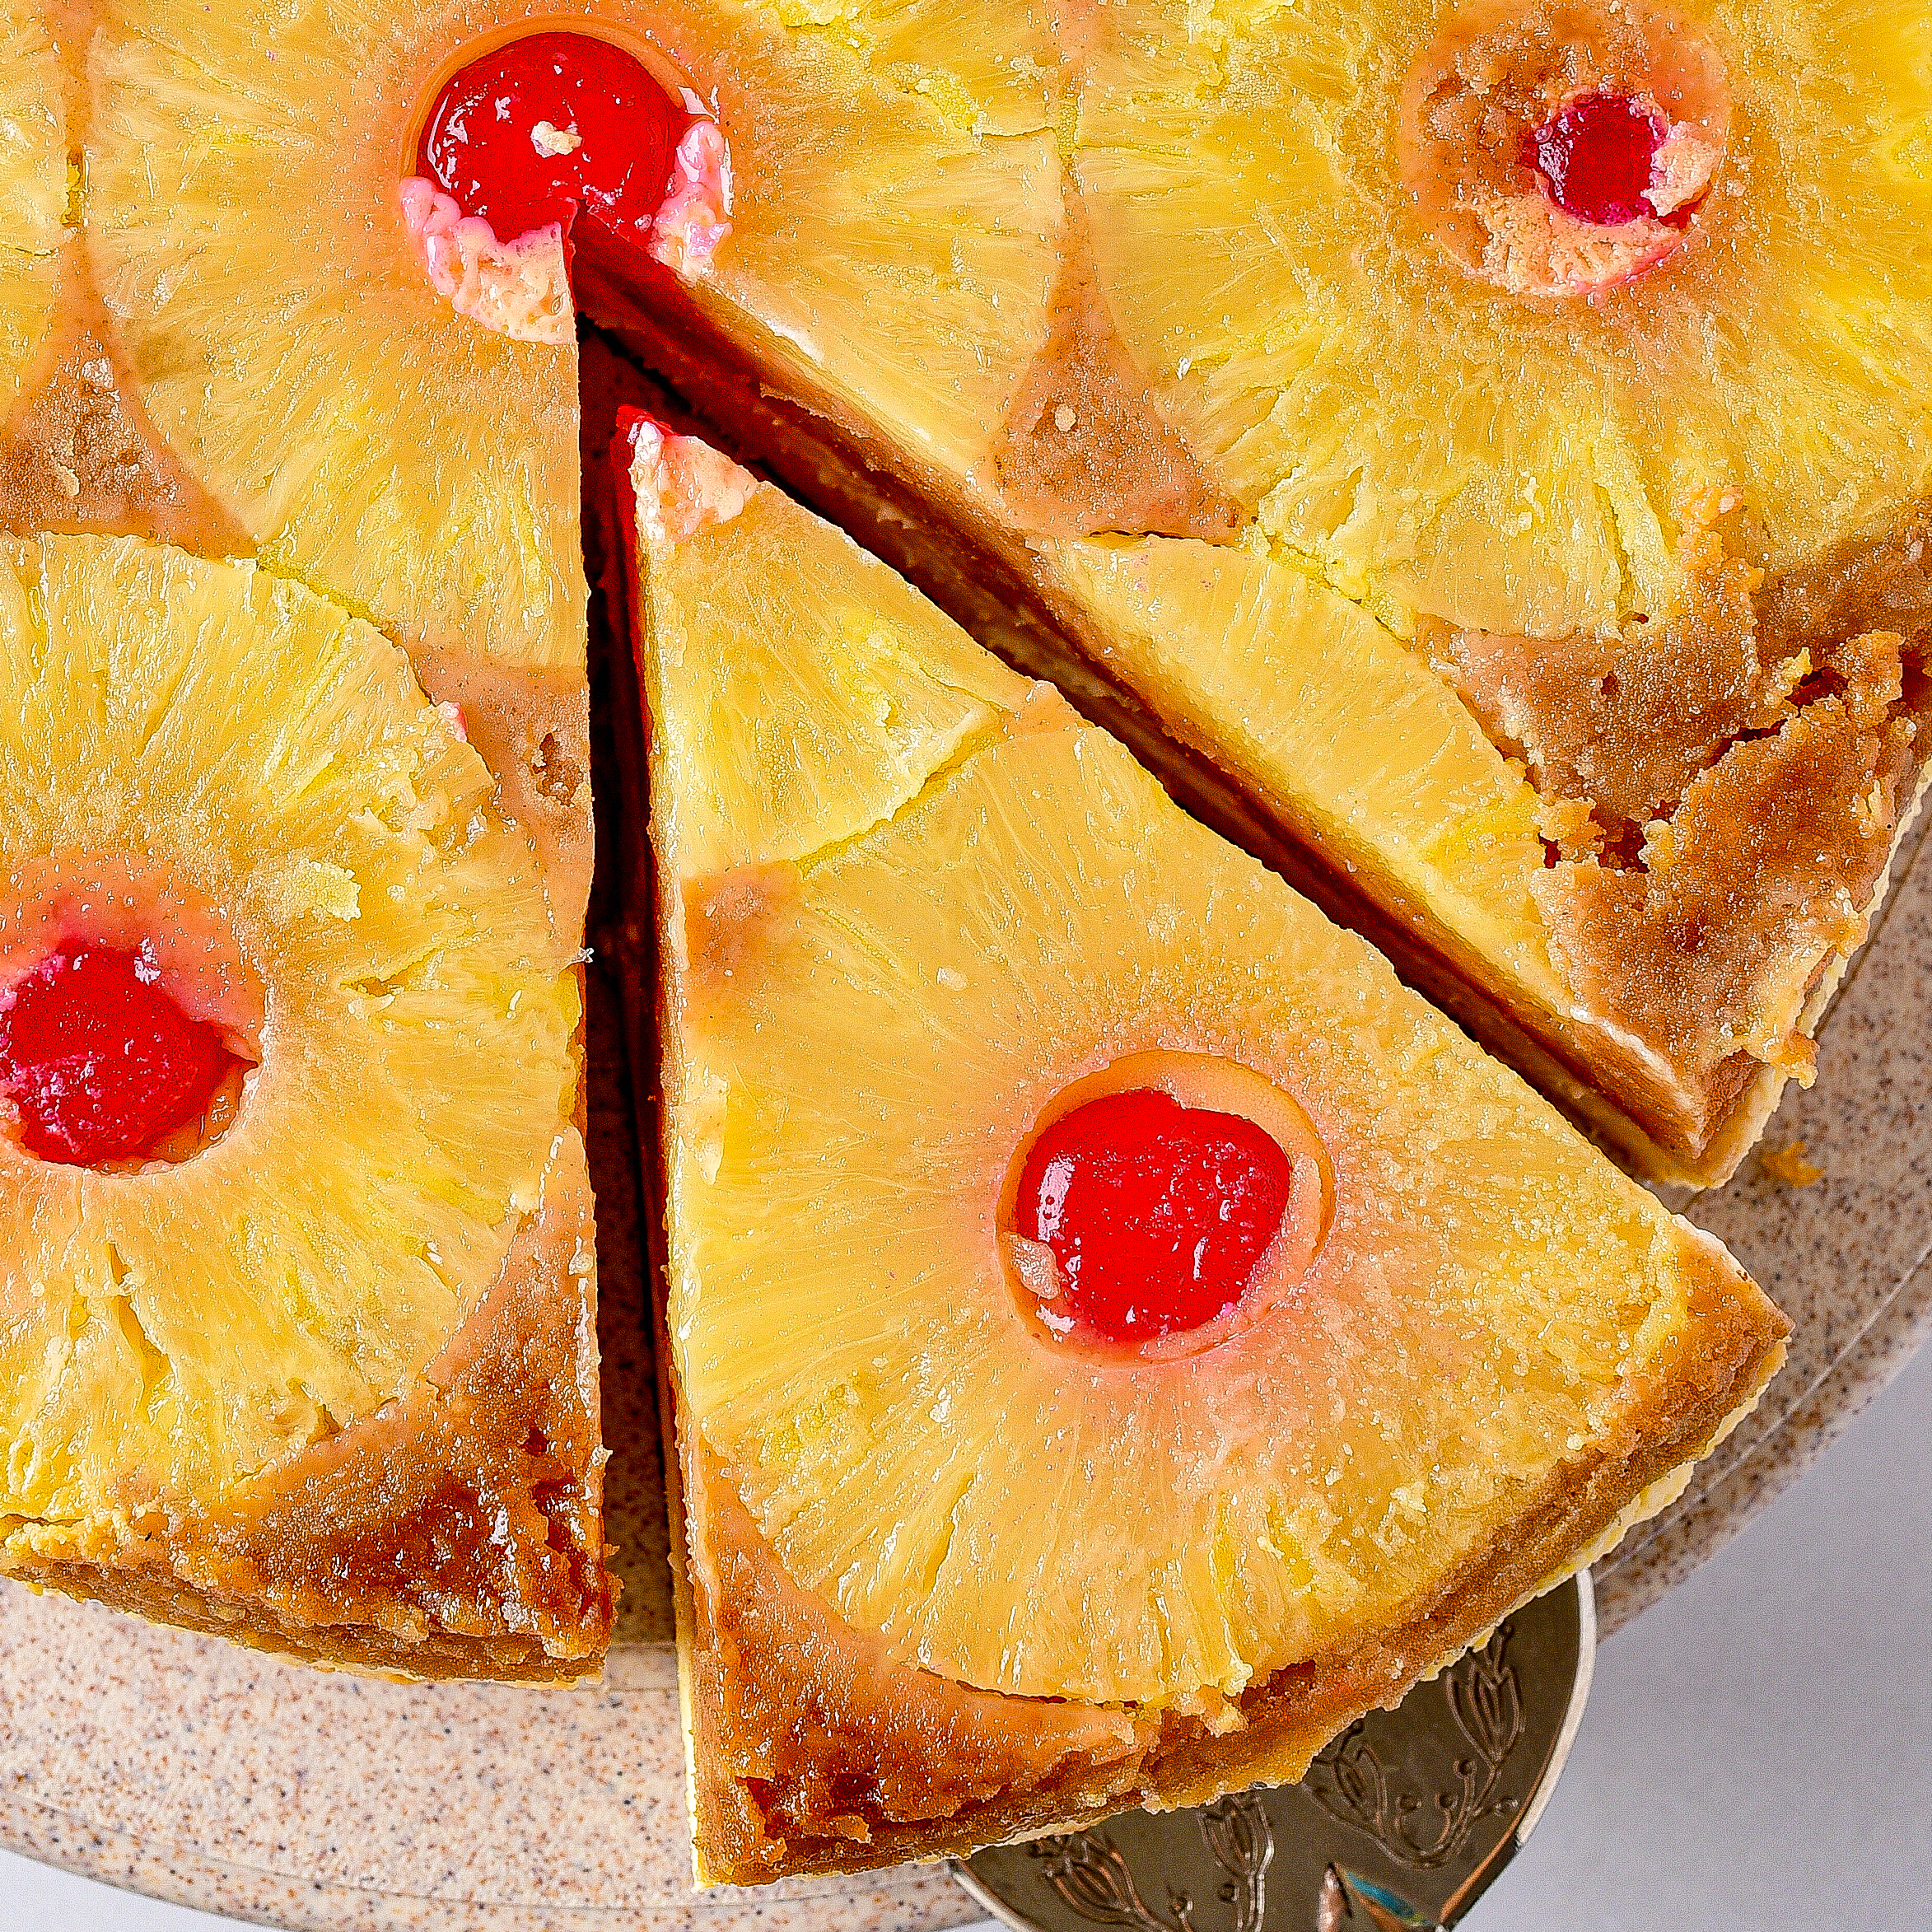 Pineapple Upside-Down Cake III Recipe